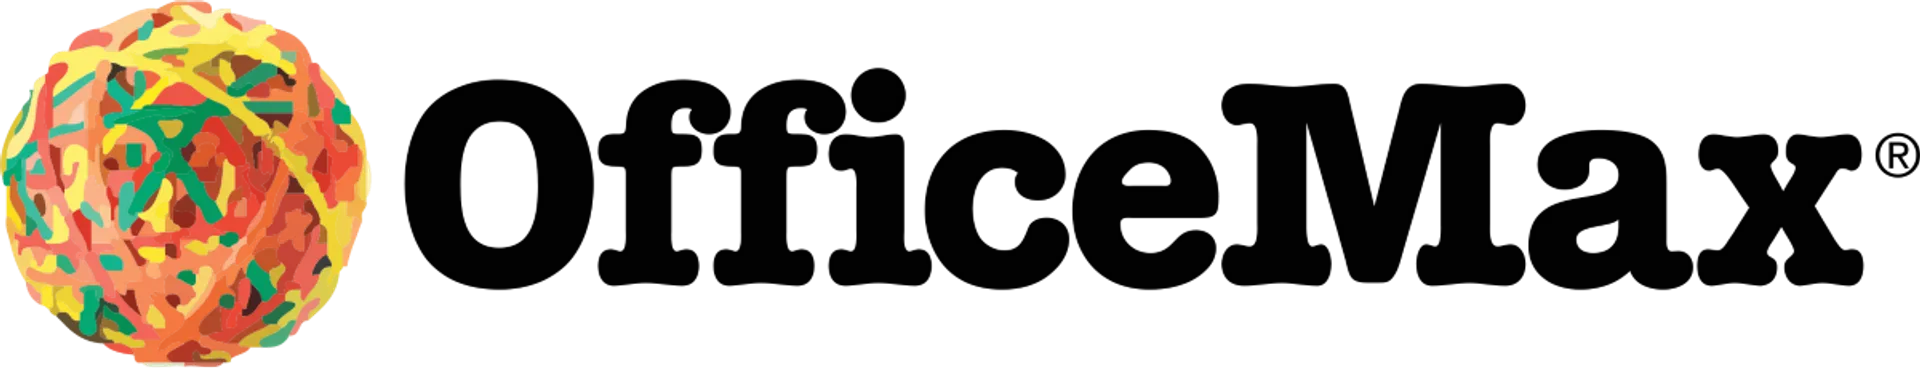 OFFICEMAX logo